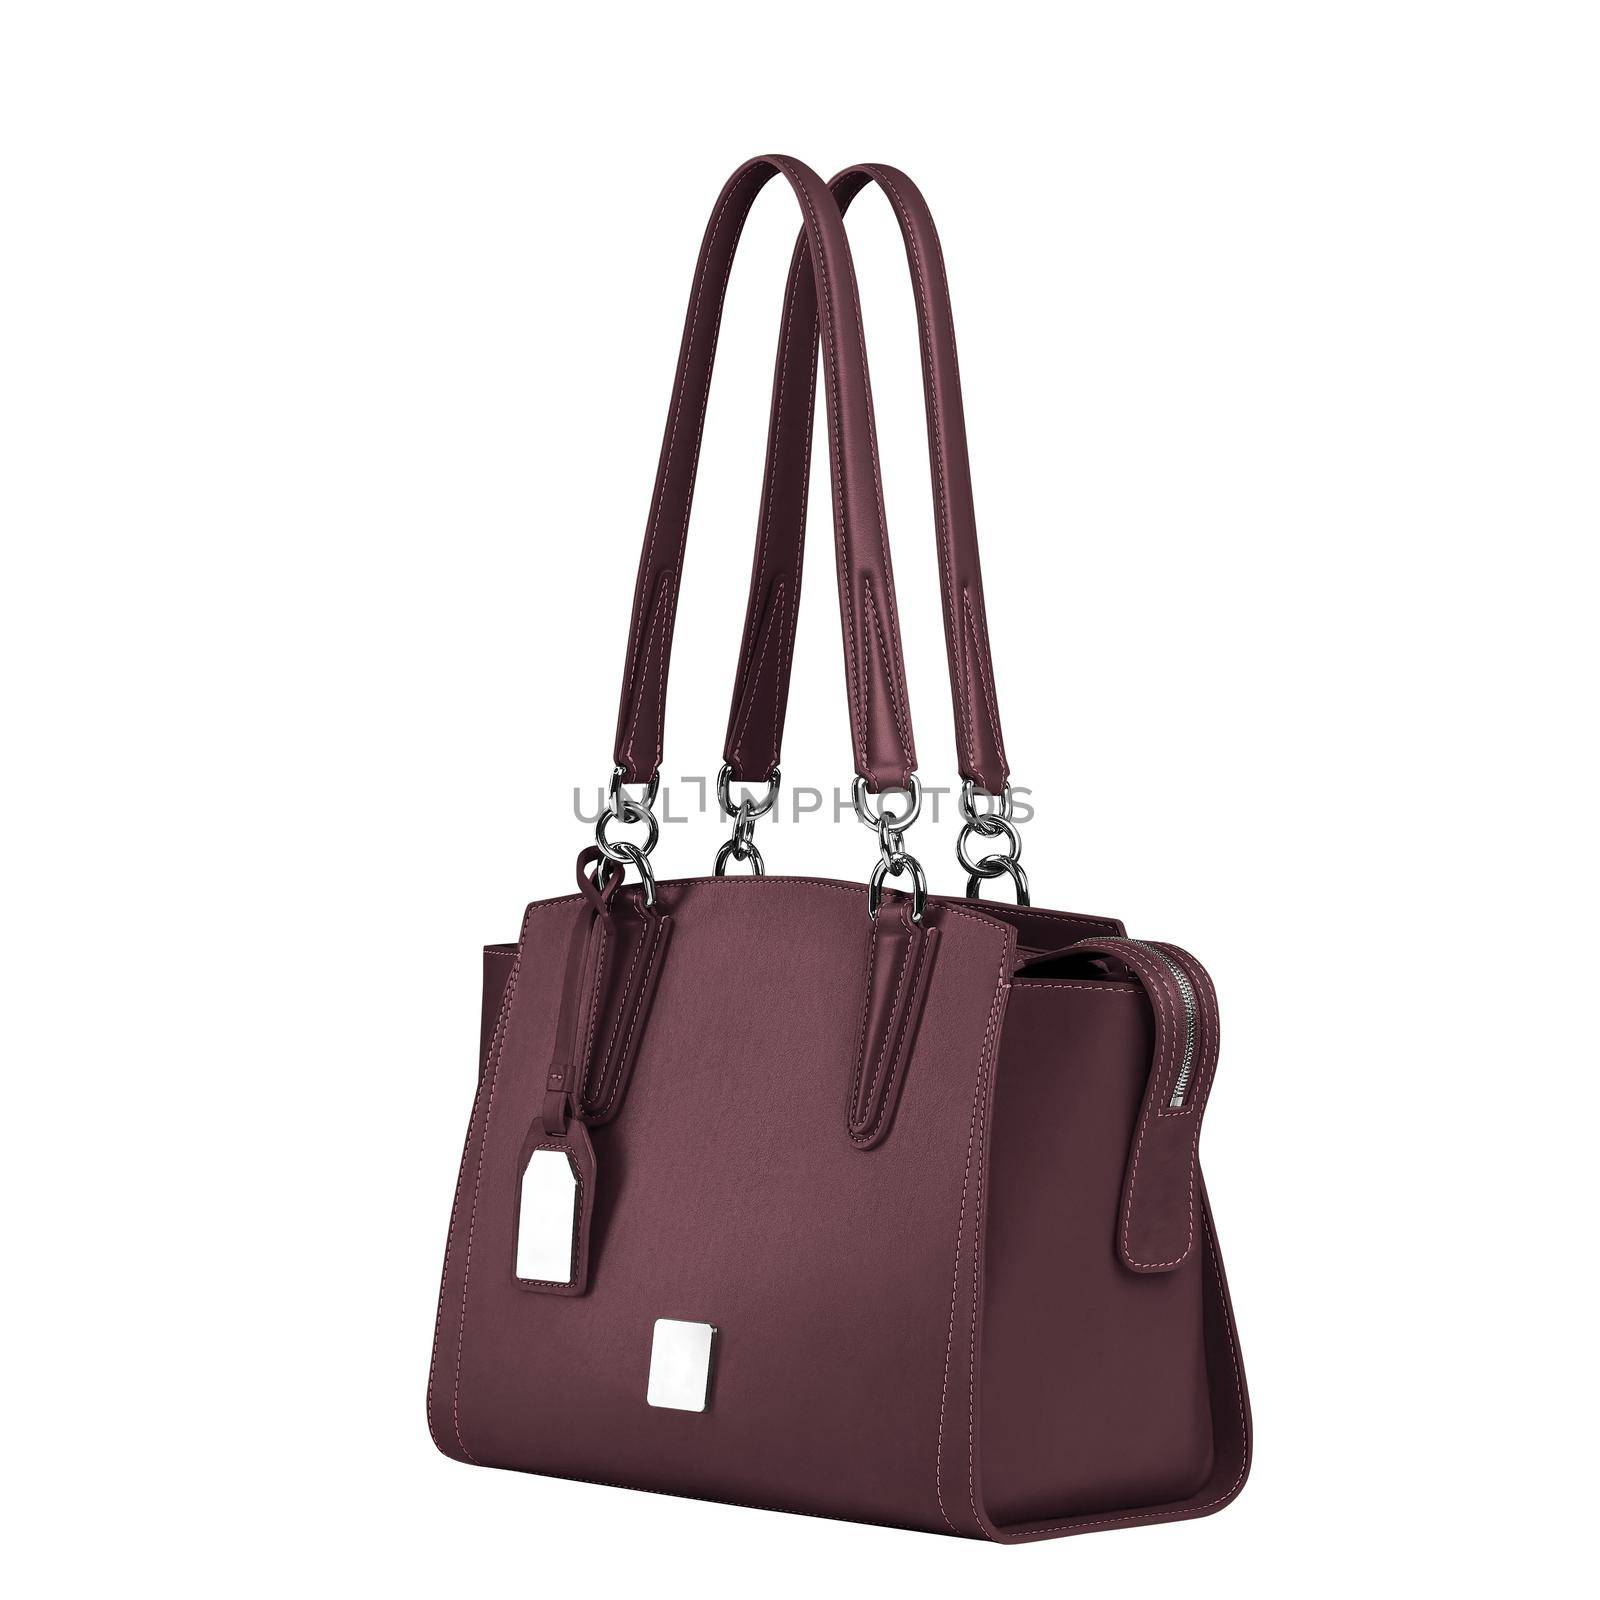 Practical dark burgundy handbag with two handles isolated on white by nazarovsergey